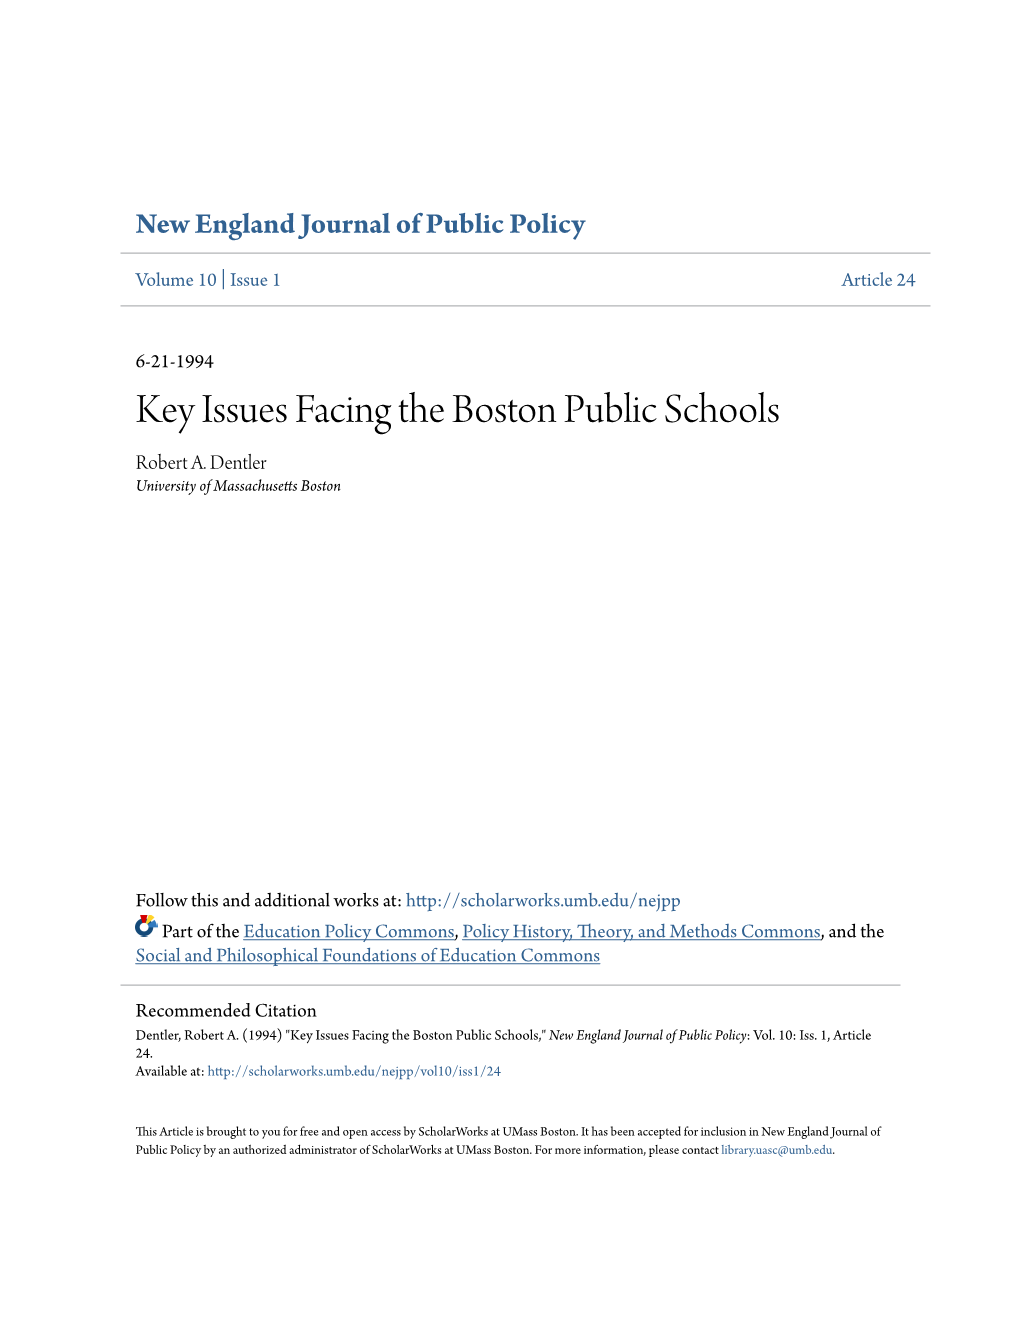 Key Issues Facing the Boston Public Schools Robert A